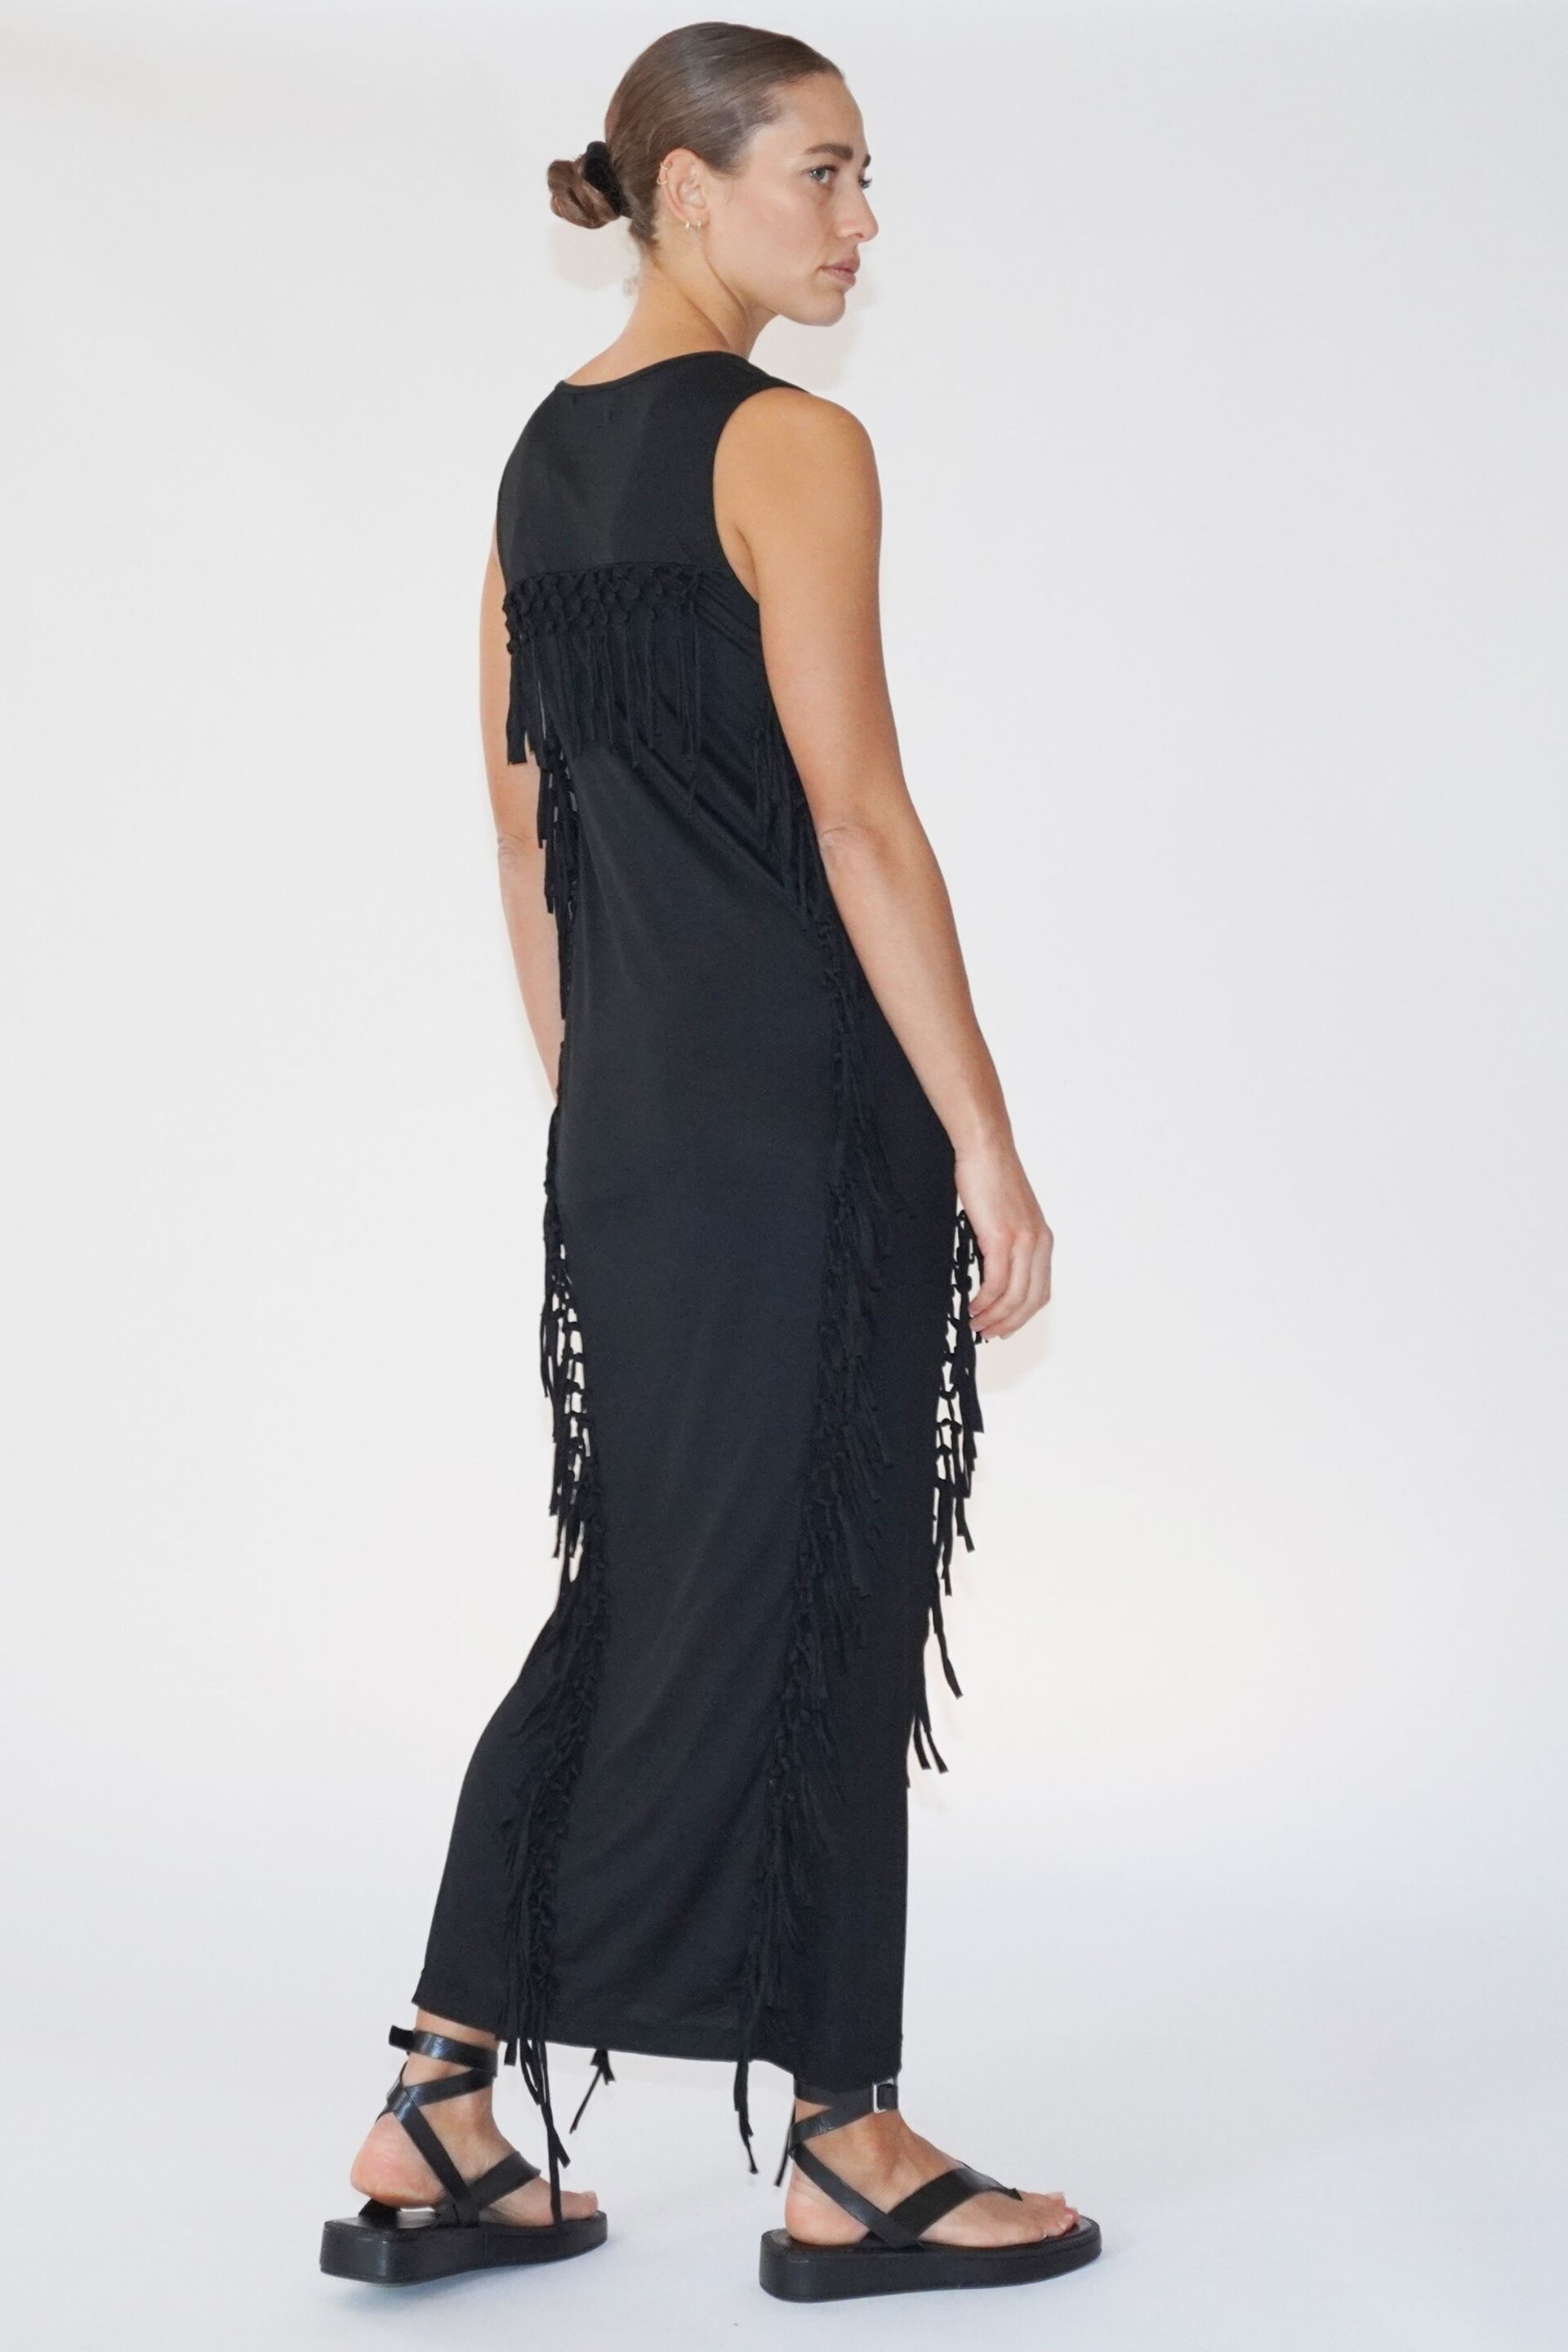 Religion Black Flourish Maxi Jersey Dress With Knots And Tassles - Image 3 of 6